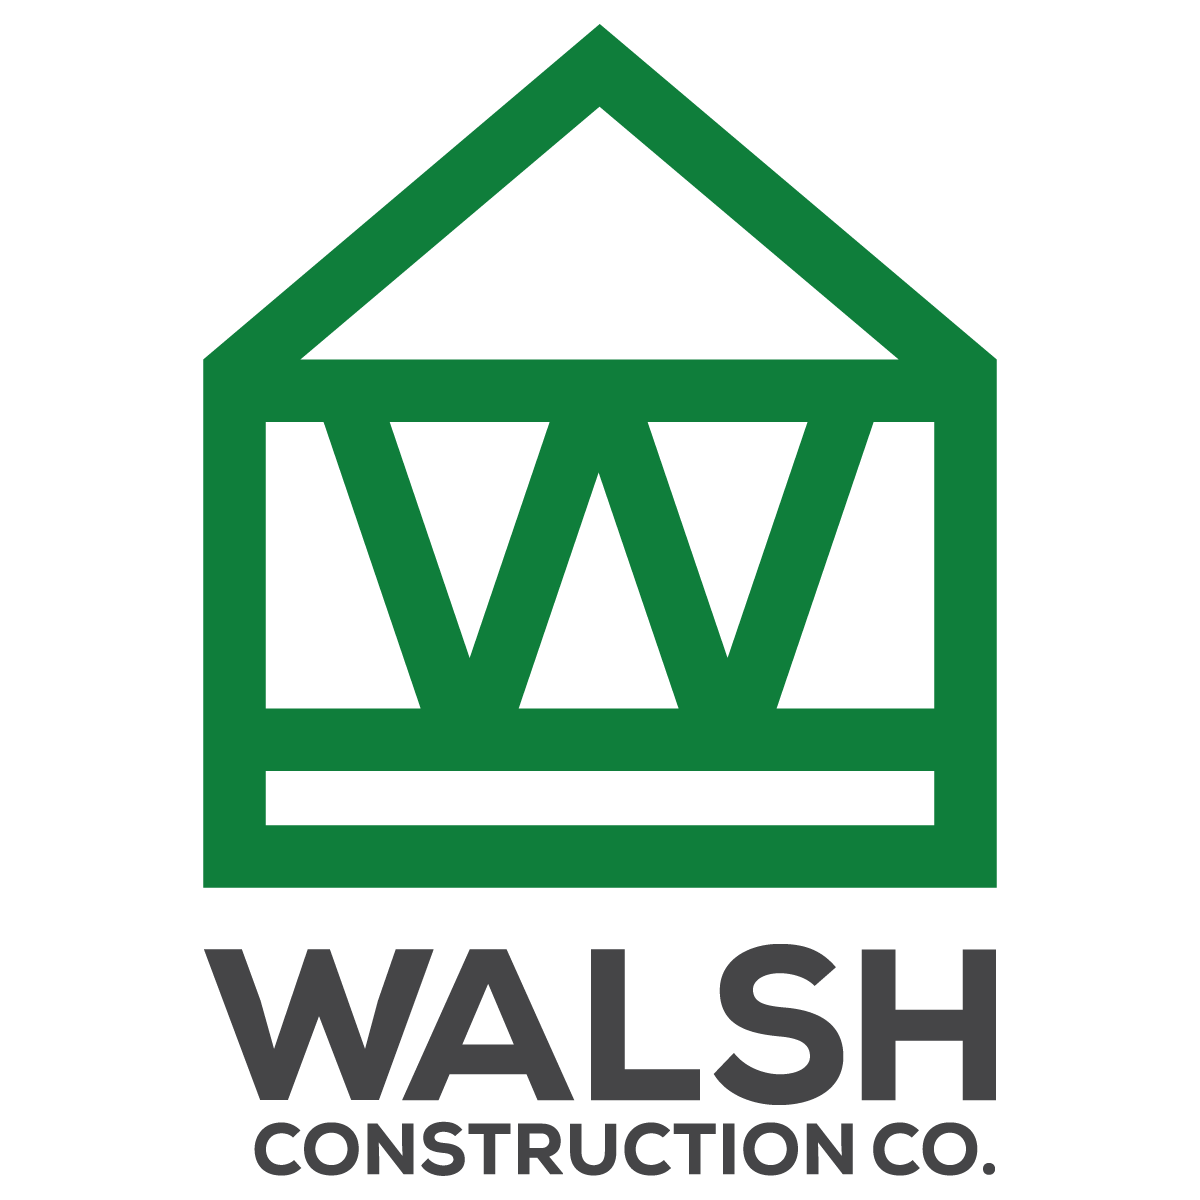 WALSH-Vertical-Logo_png.png